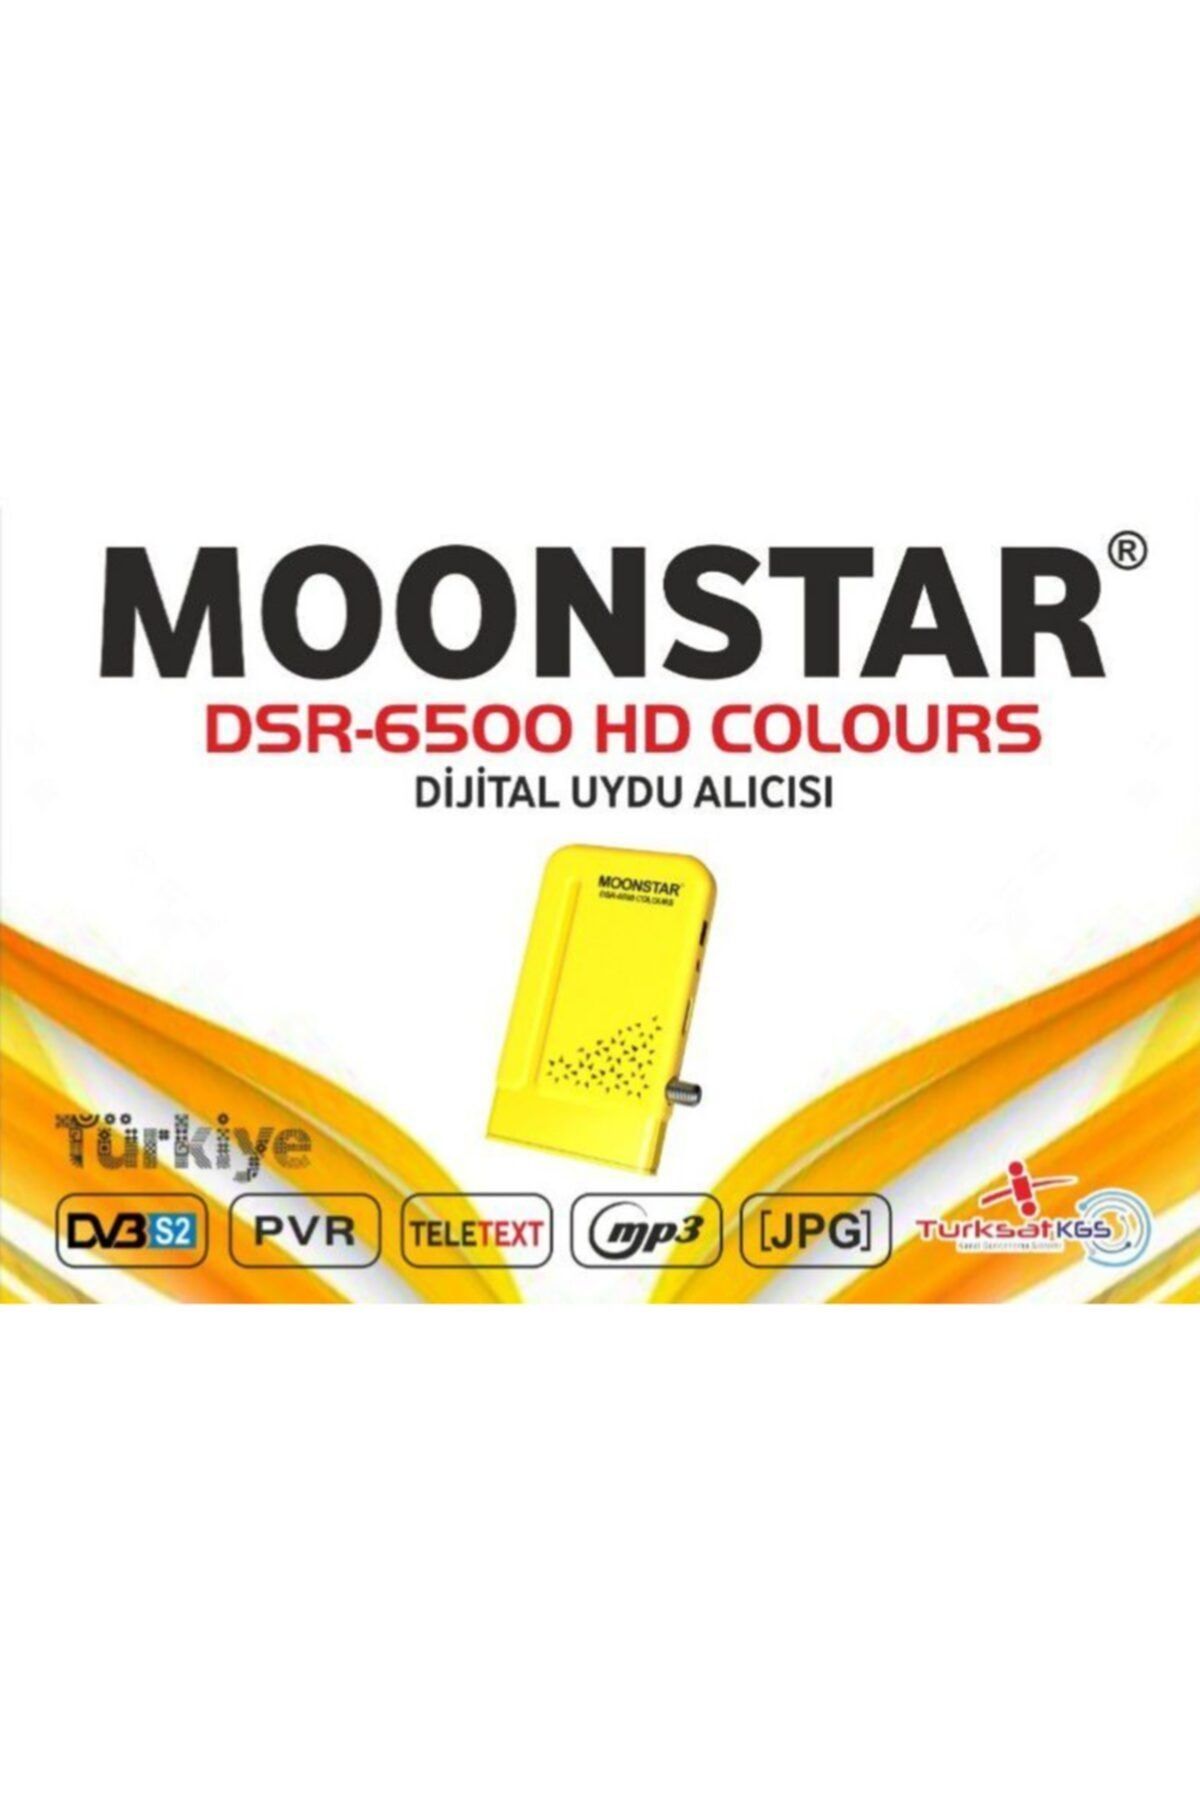 Moonstar Dsr-6500 Hd Colours Sarı Uydu Alıcısı